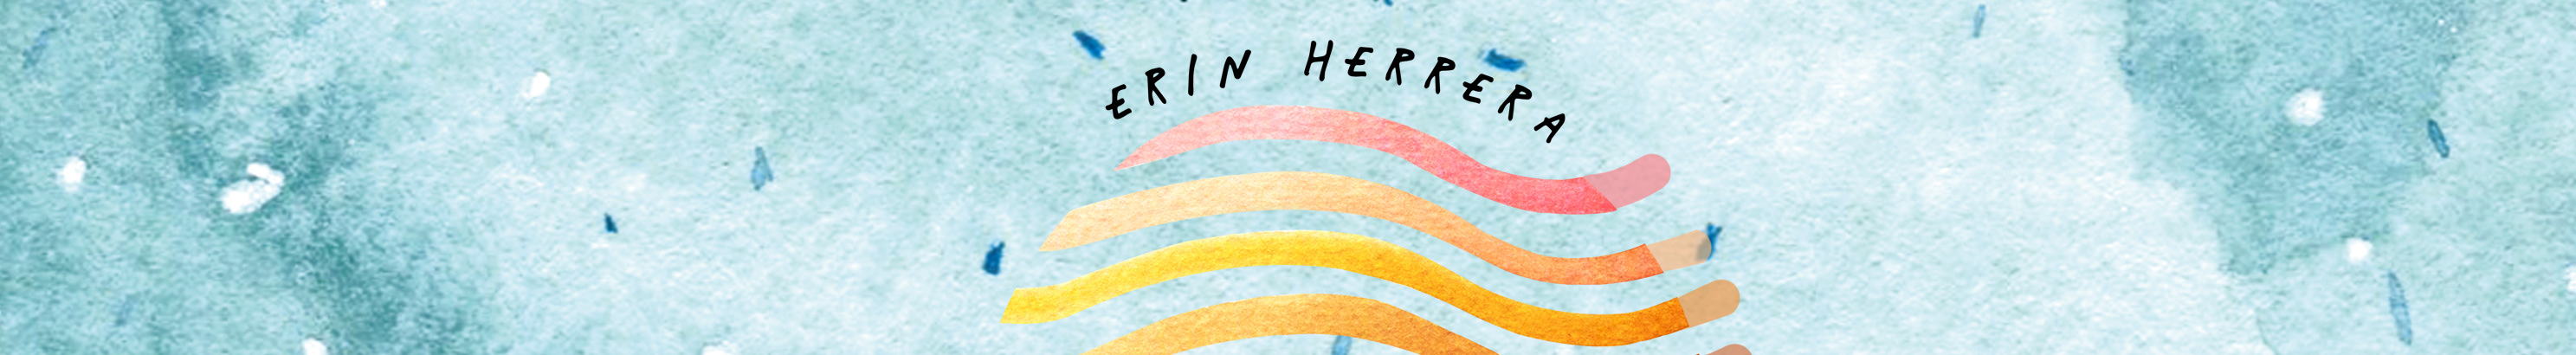 Erin Herrera's profile banner